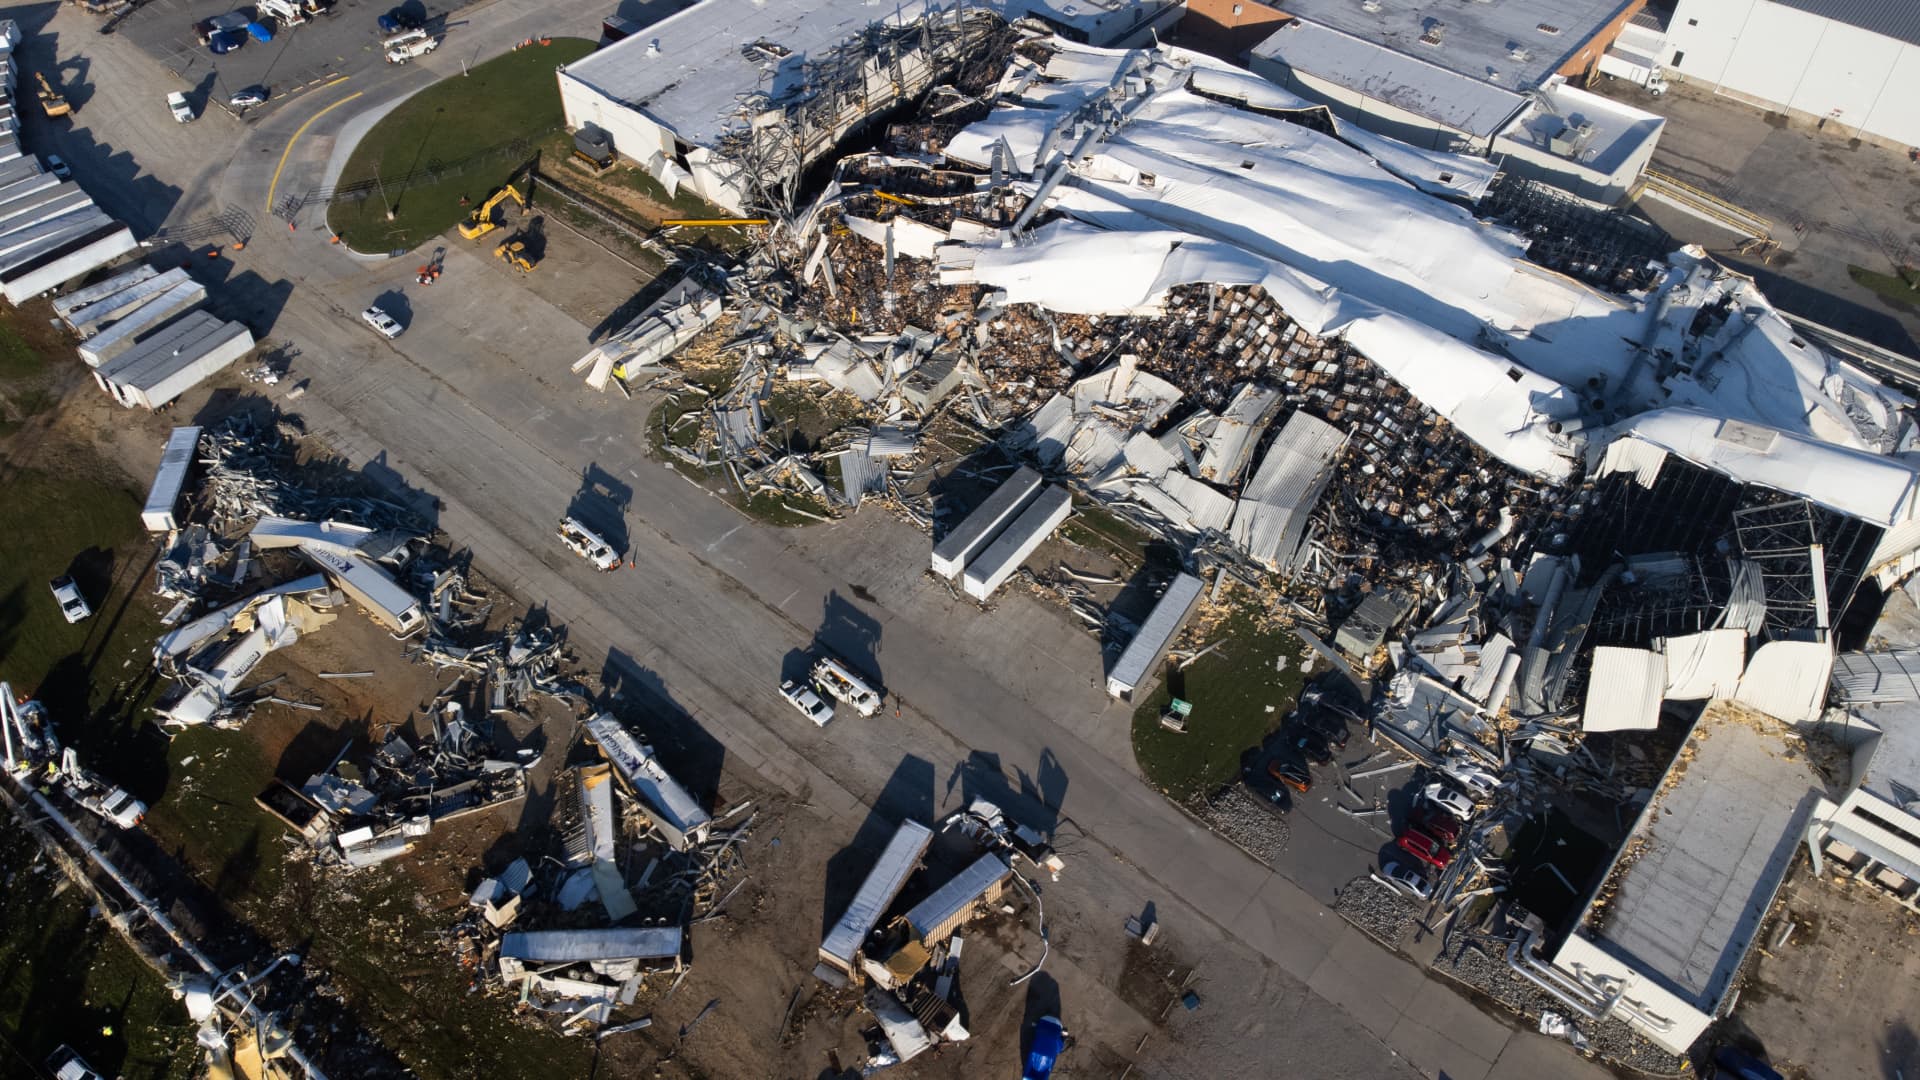 Pfizer restarts production at tornado damaged plant in North Carolina